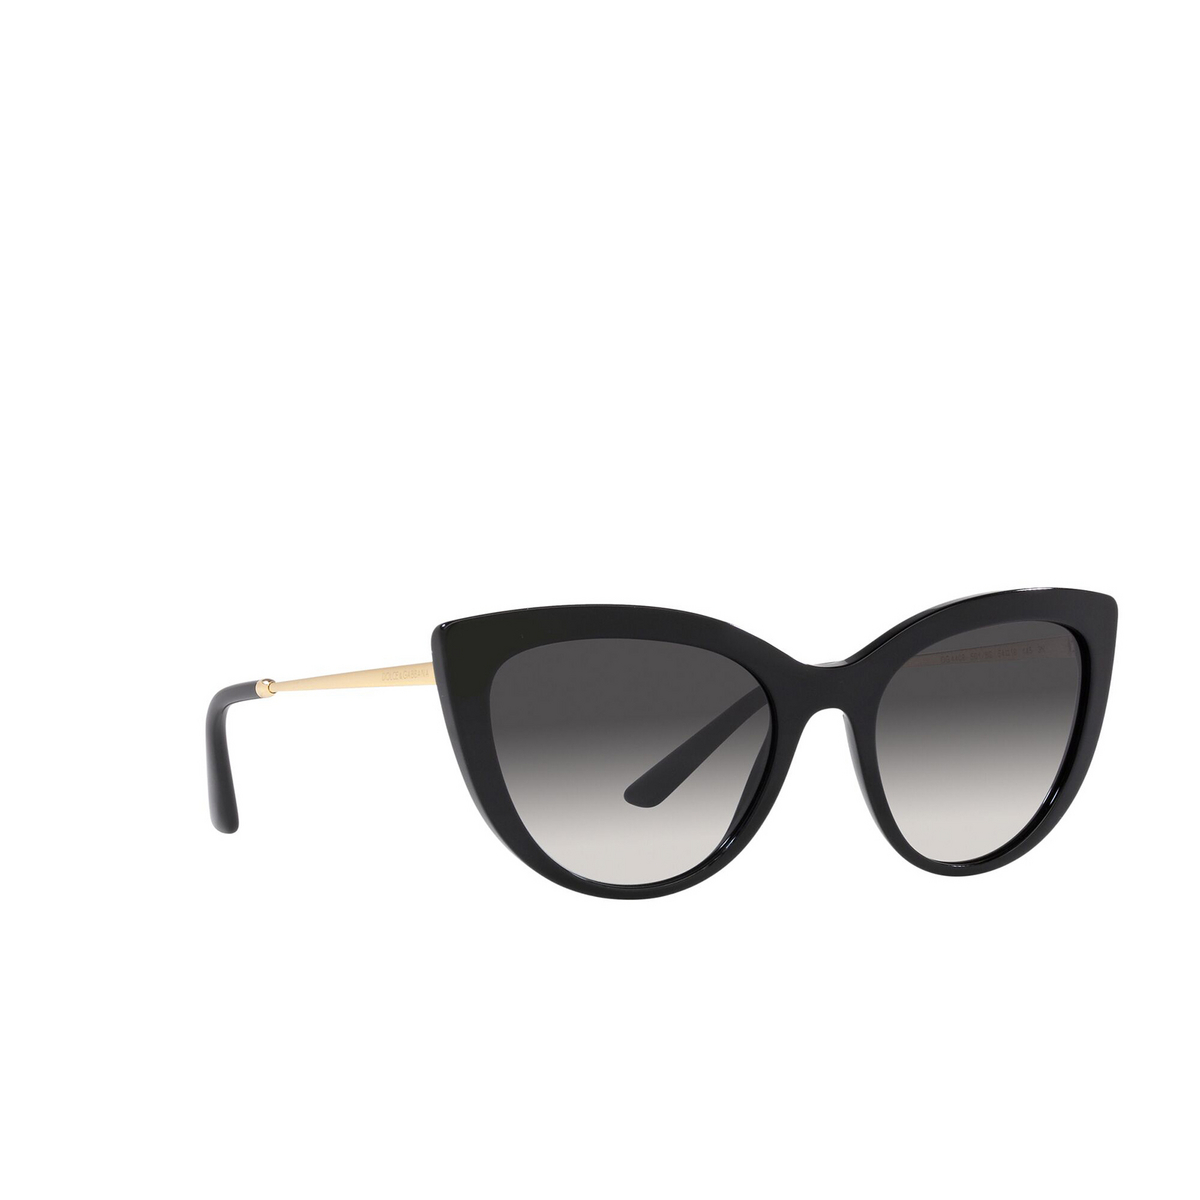 Dolce & Gabbana® Butterfly Sunglasses: DG4408 color Black 501/8G - three-quarters view.